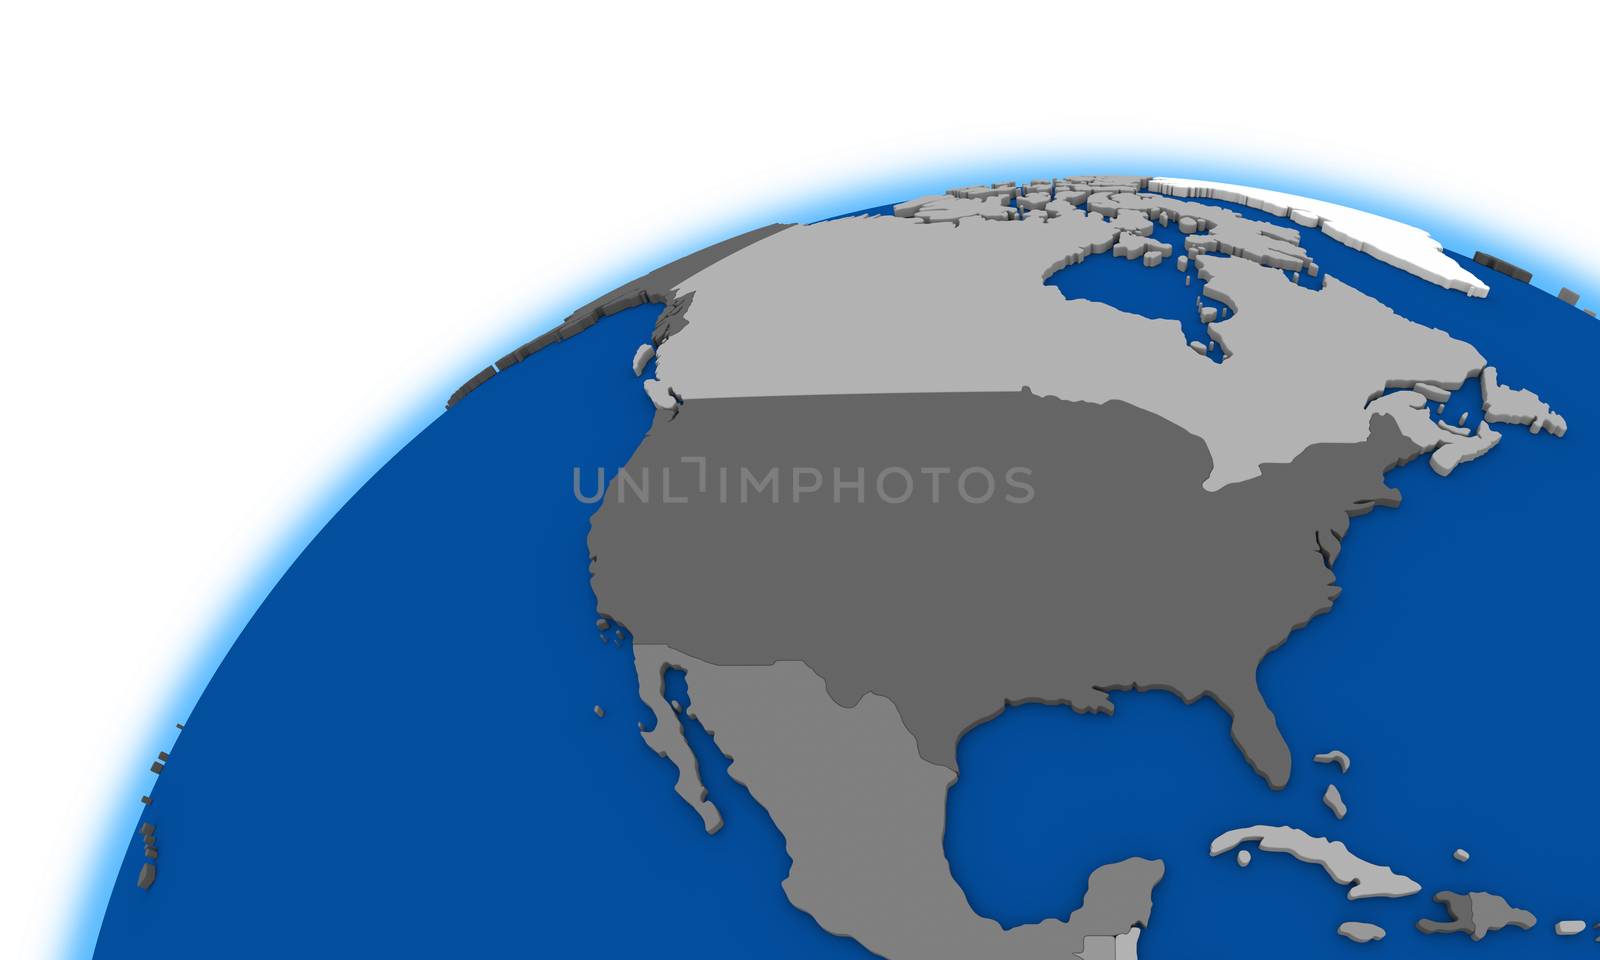 north America on globe, political map